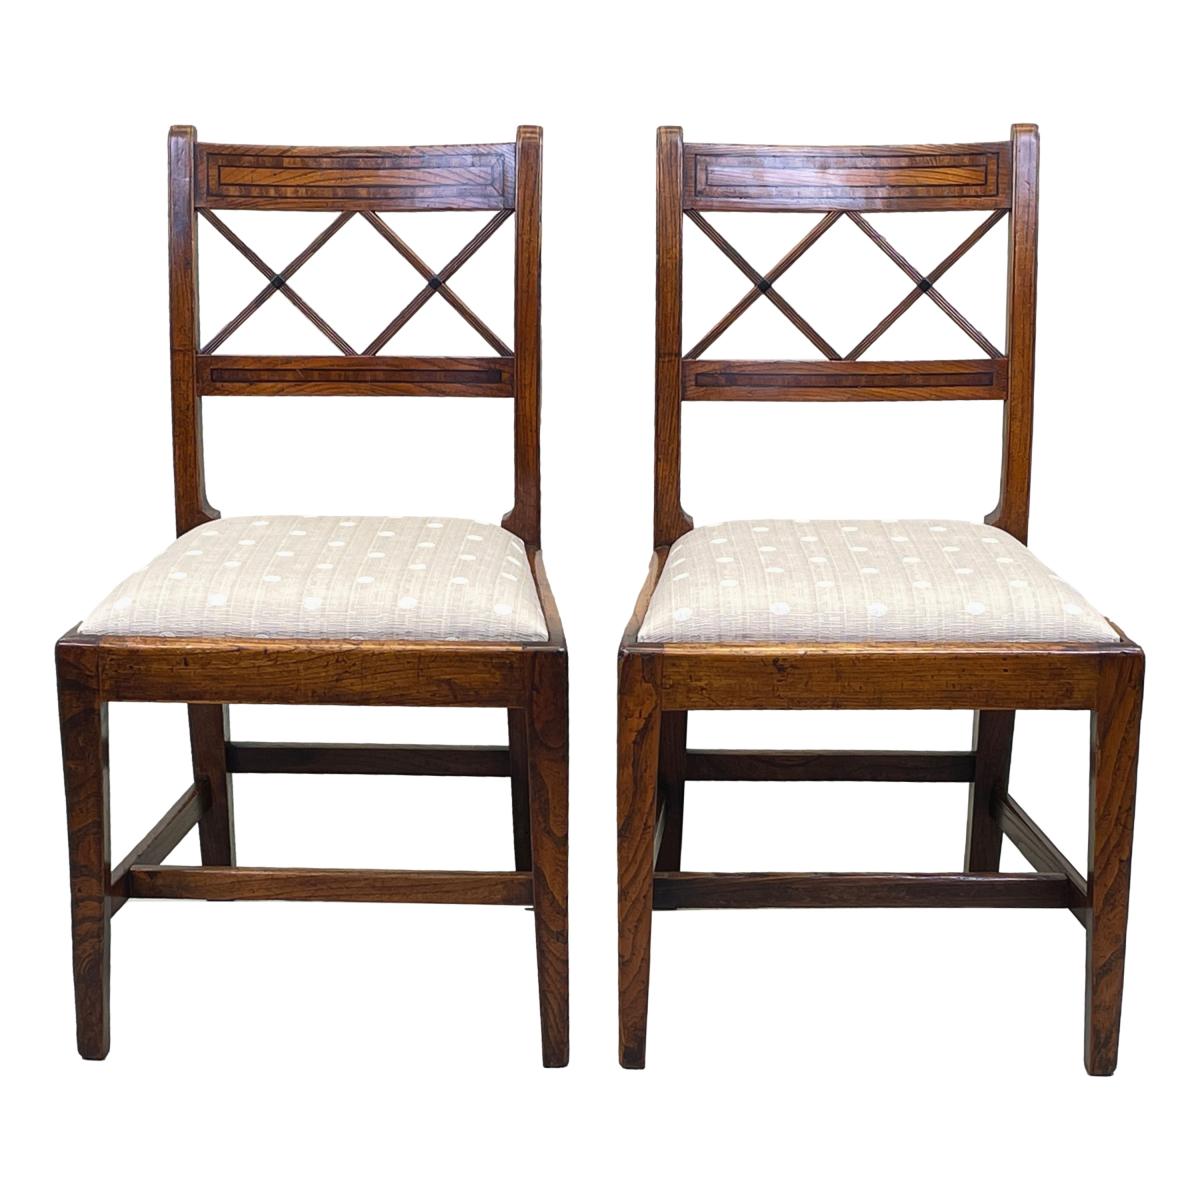 Set Of 6 Georgian Elm Dining Chairs